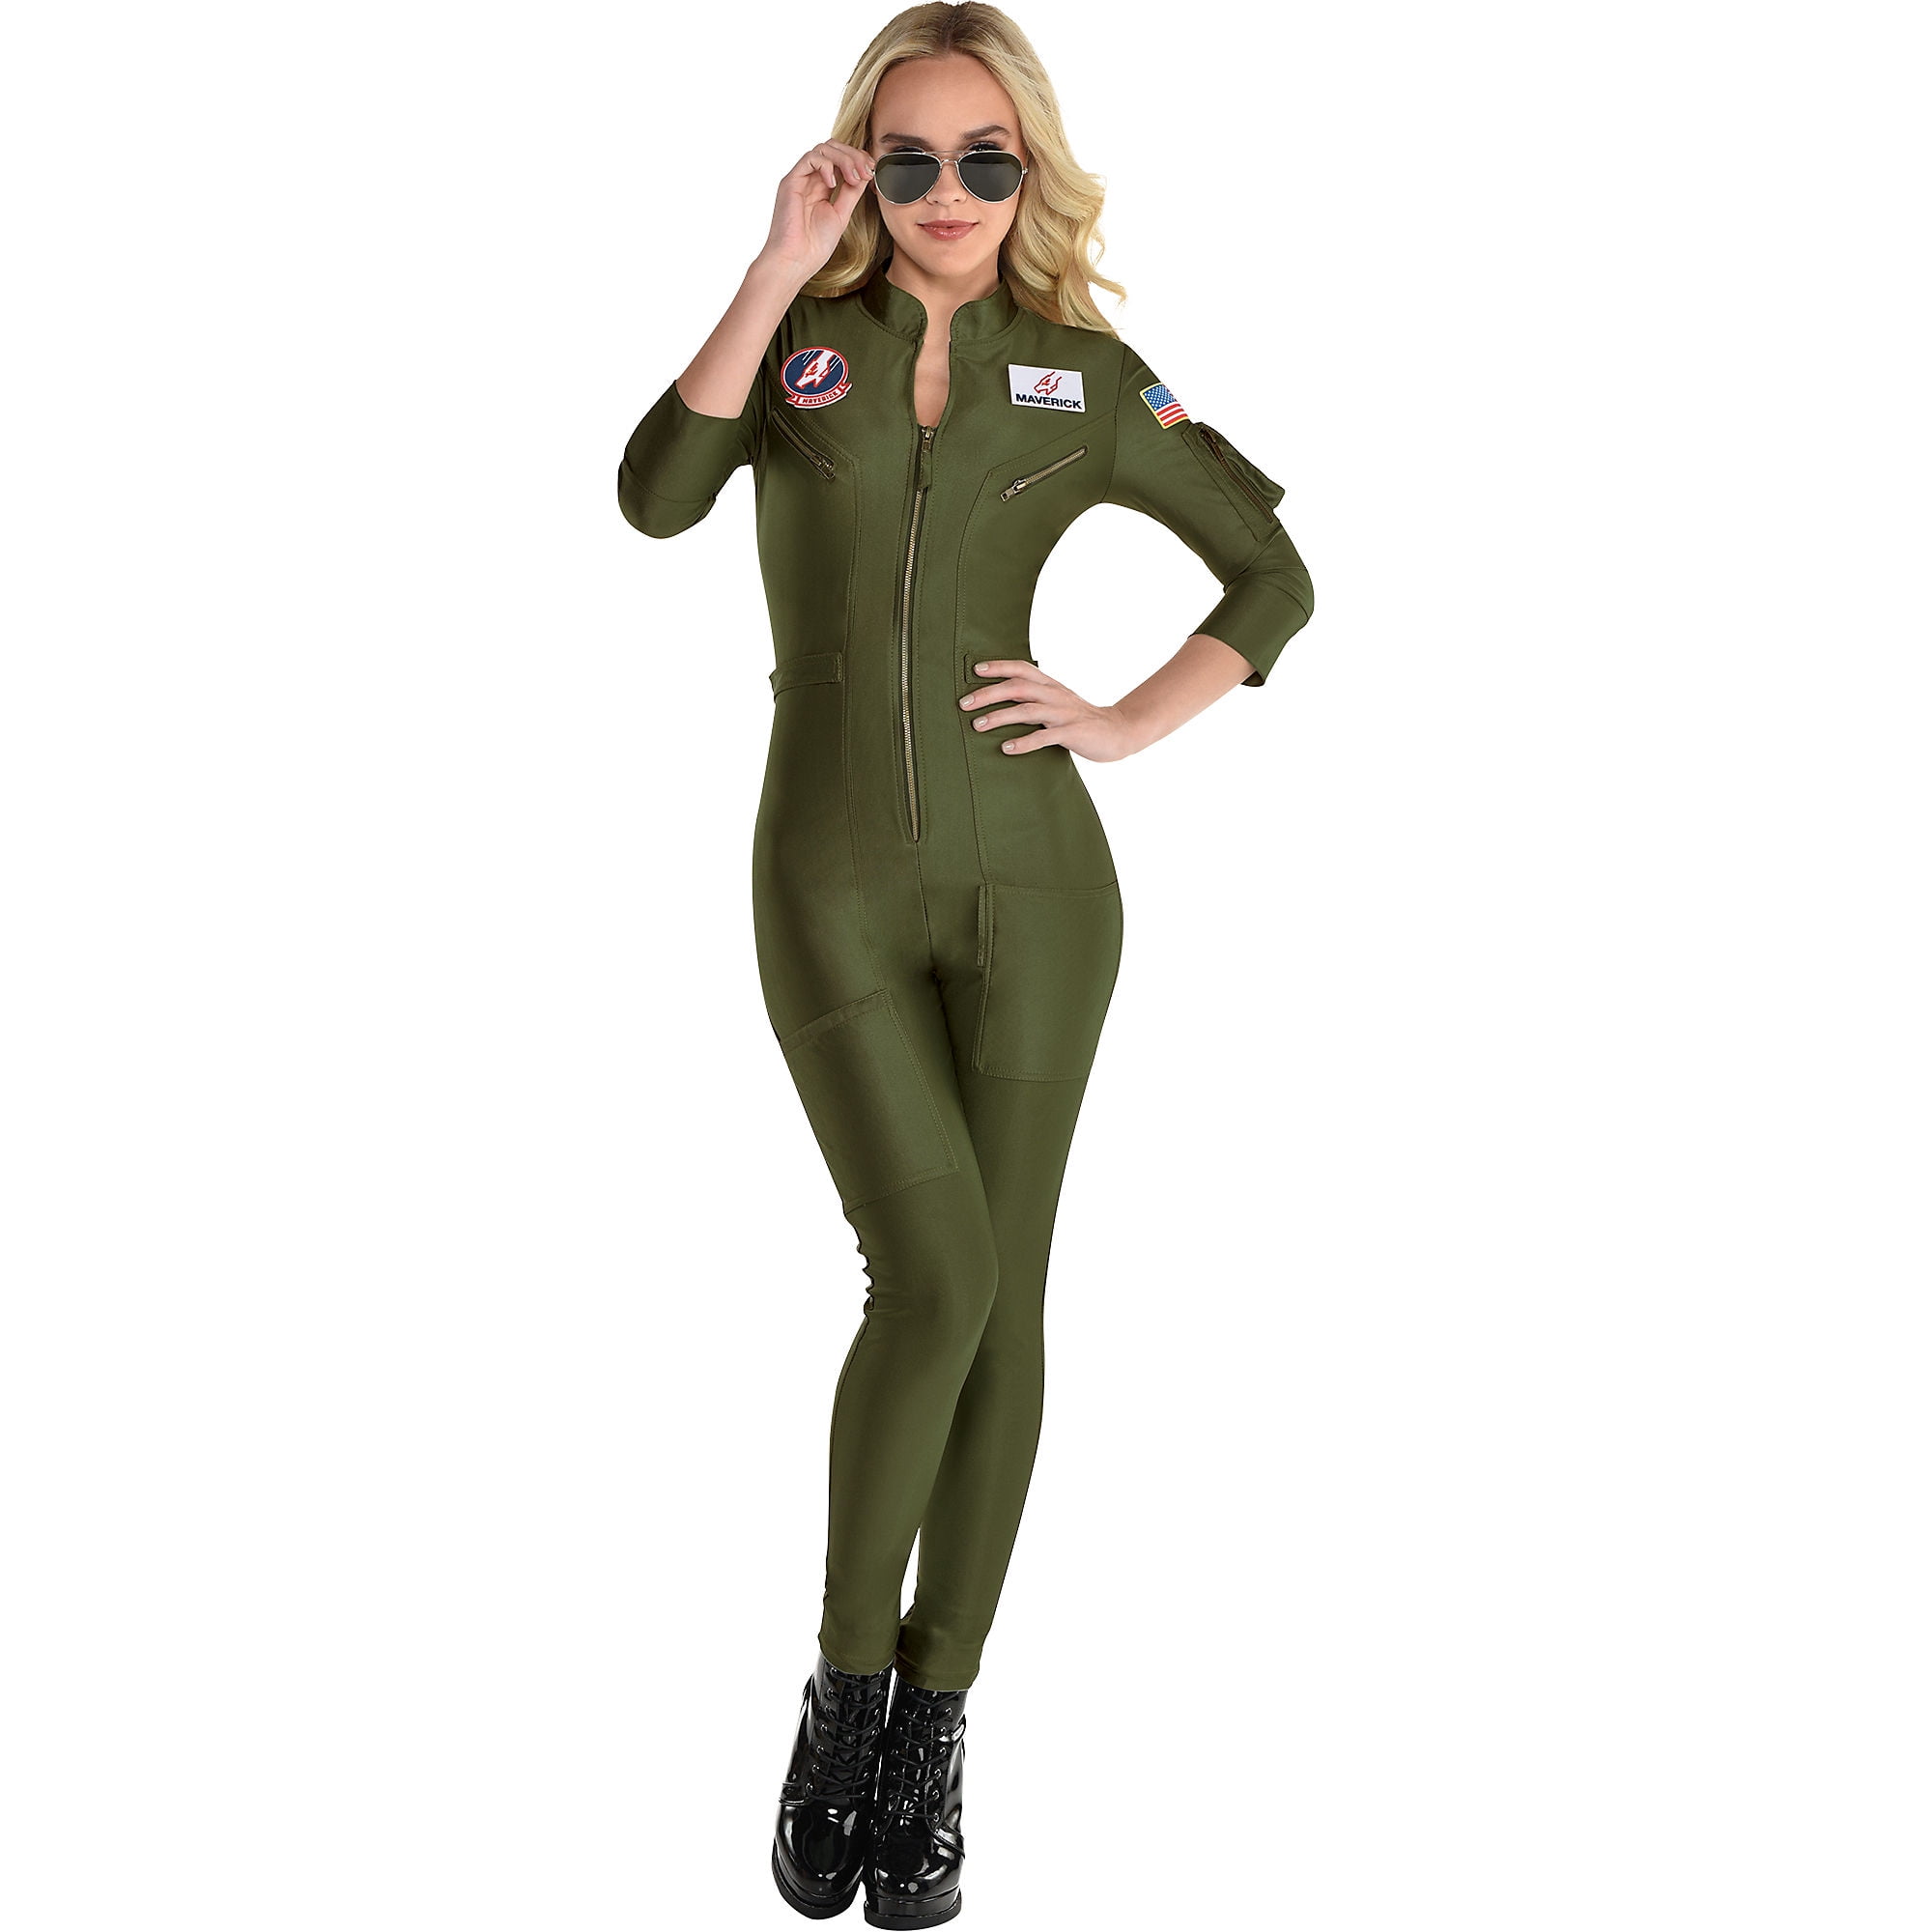 Party City Top Gun: Maverick Flight Costume for Women, Halloween, Olive Green, Large (10-12), Catsuit with Zipper - Walmart.com